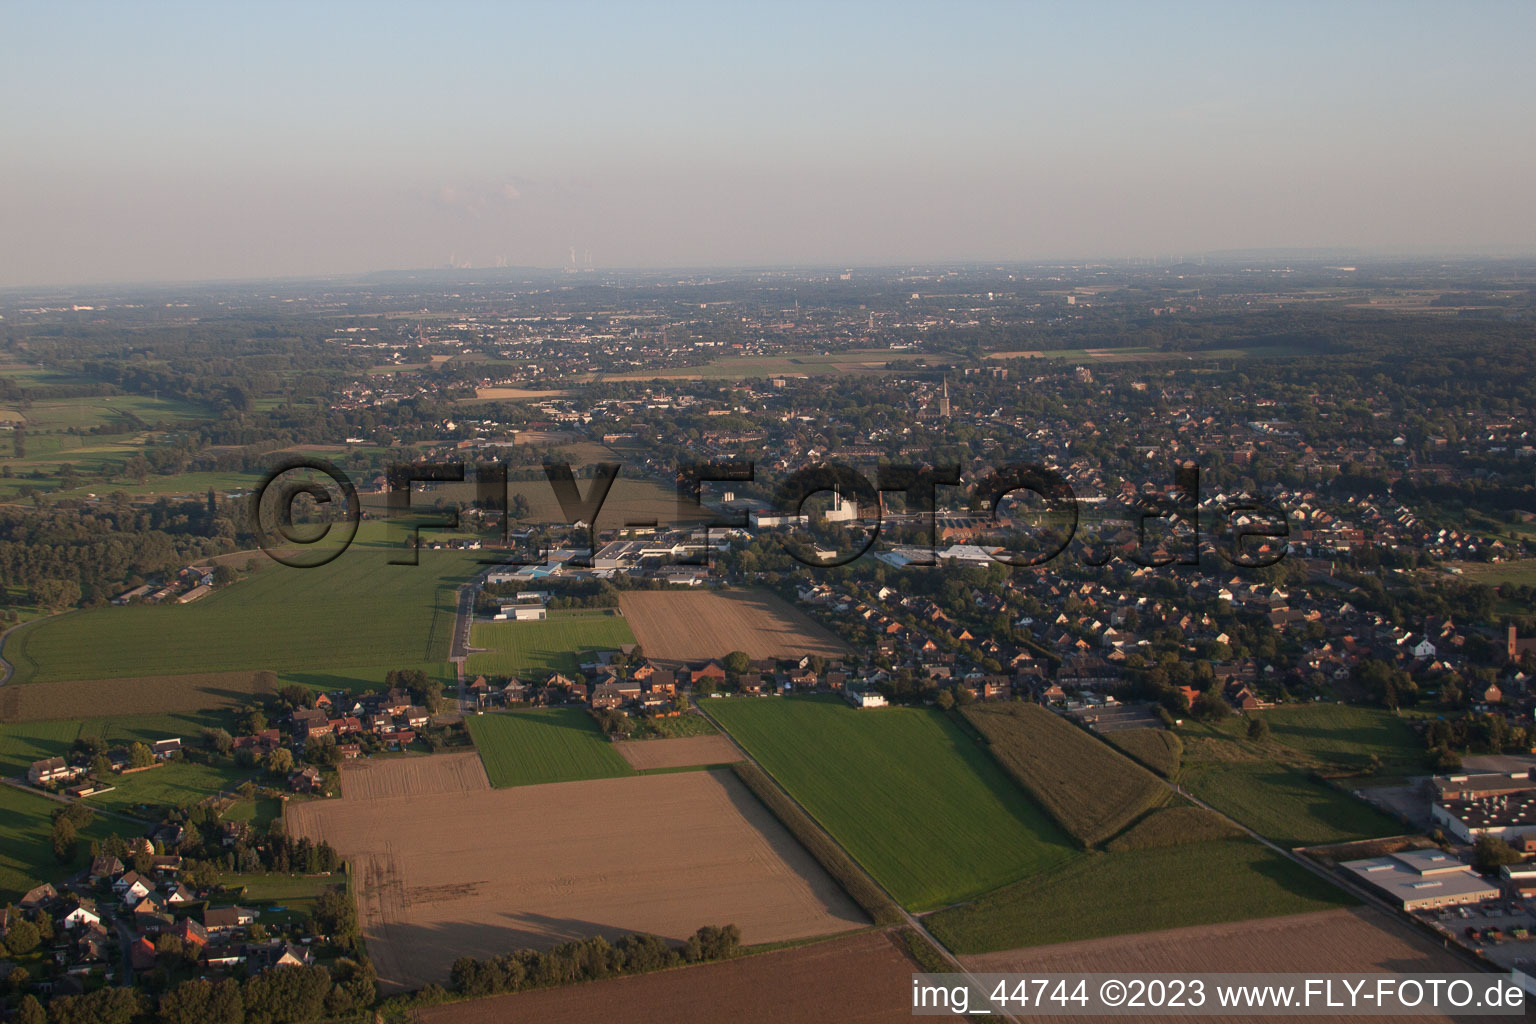 Aerial view of Grefrath in the state North Rhine-Westphalia, Germany